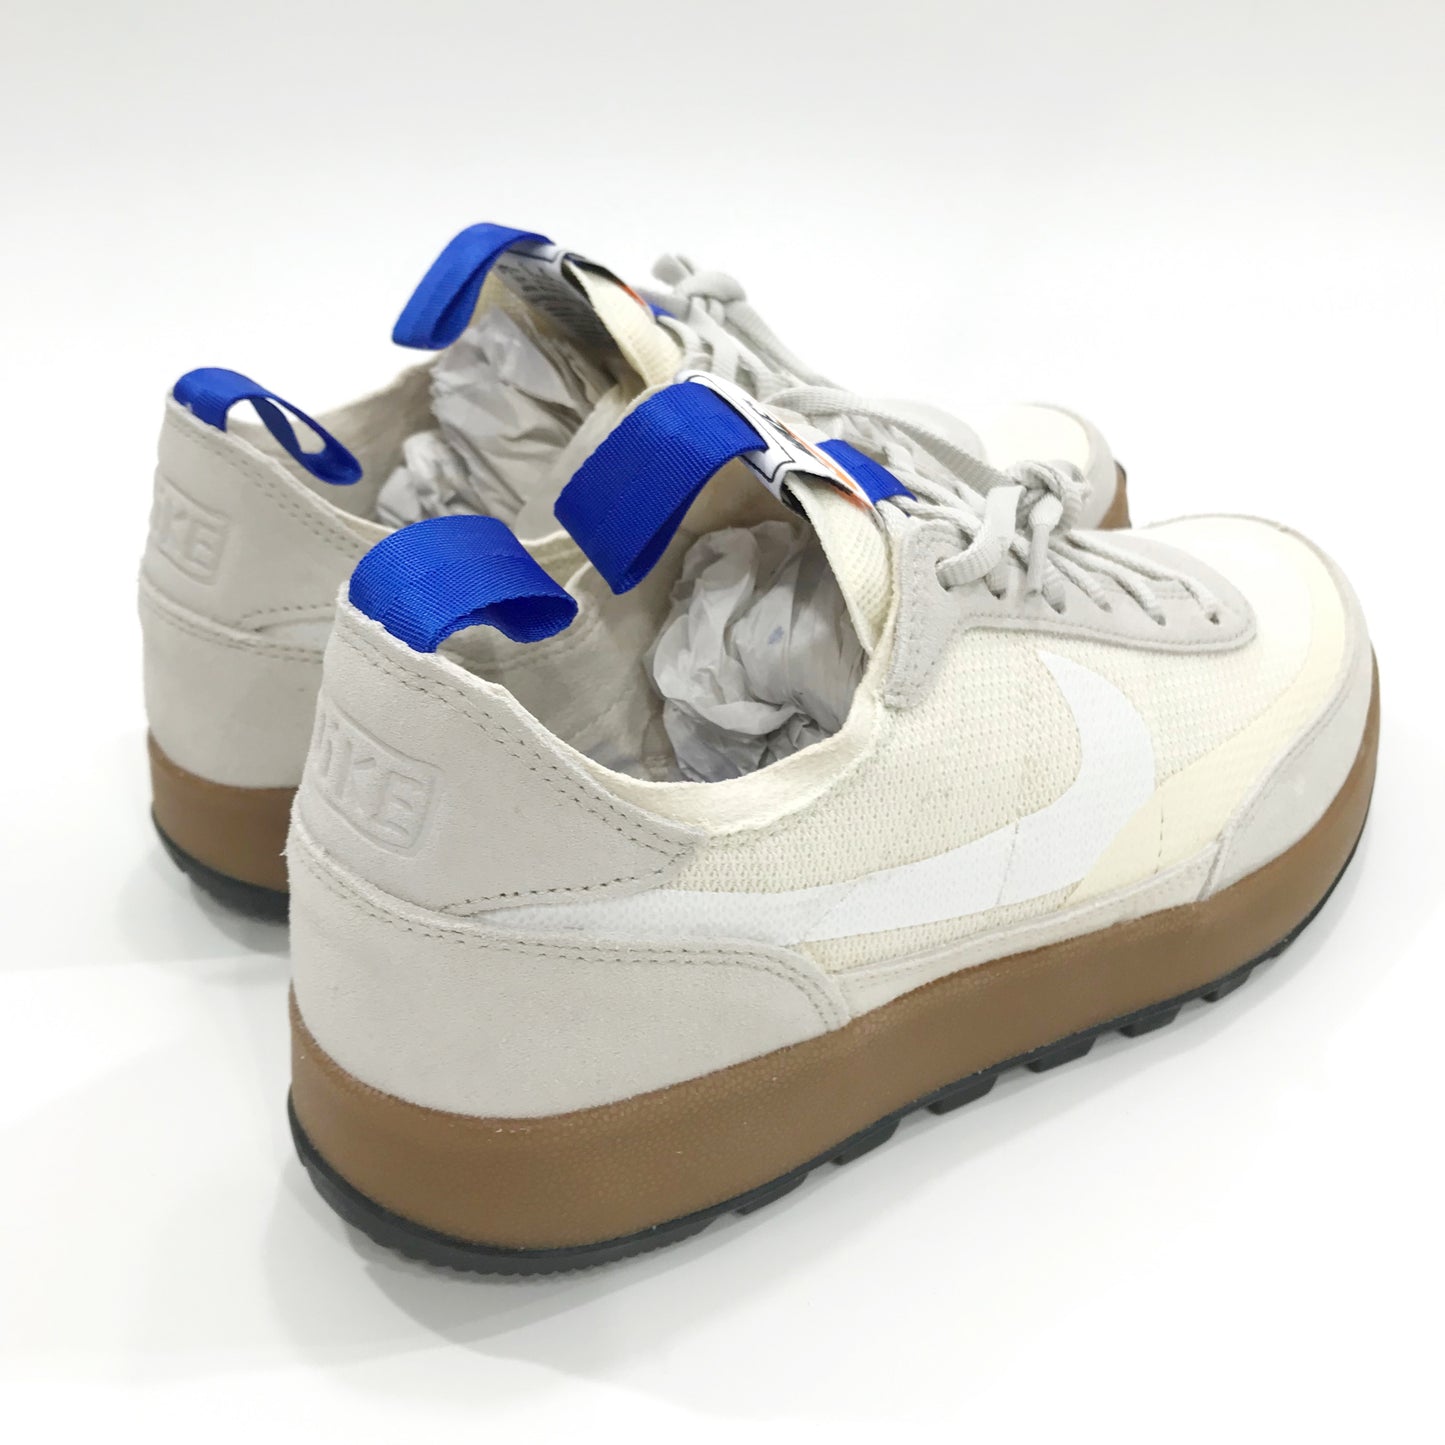 Tom Sachs x NikeCraft General Purpose Shoe 'Studio' - US9